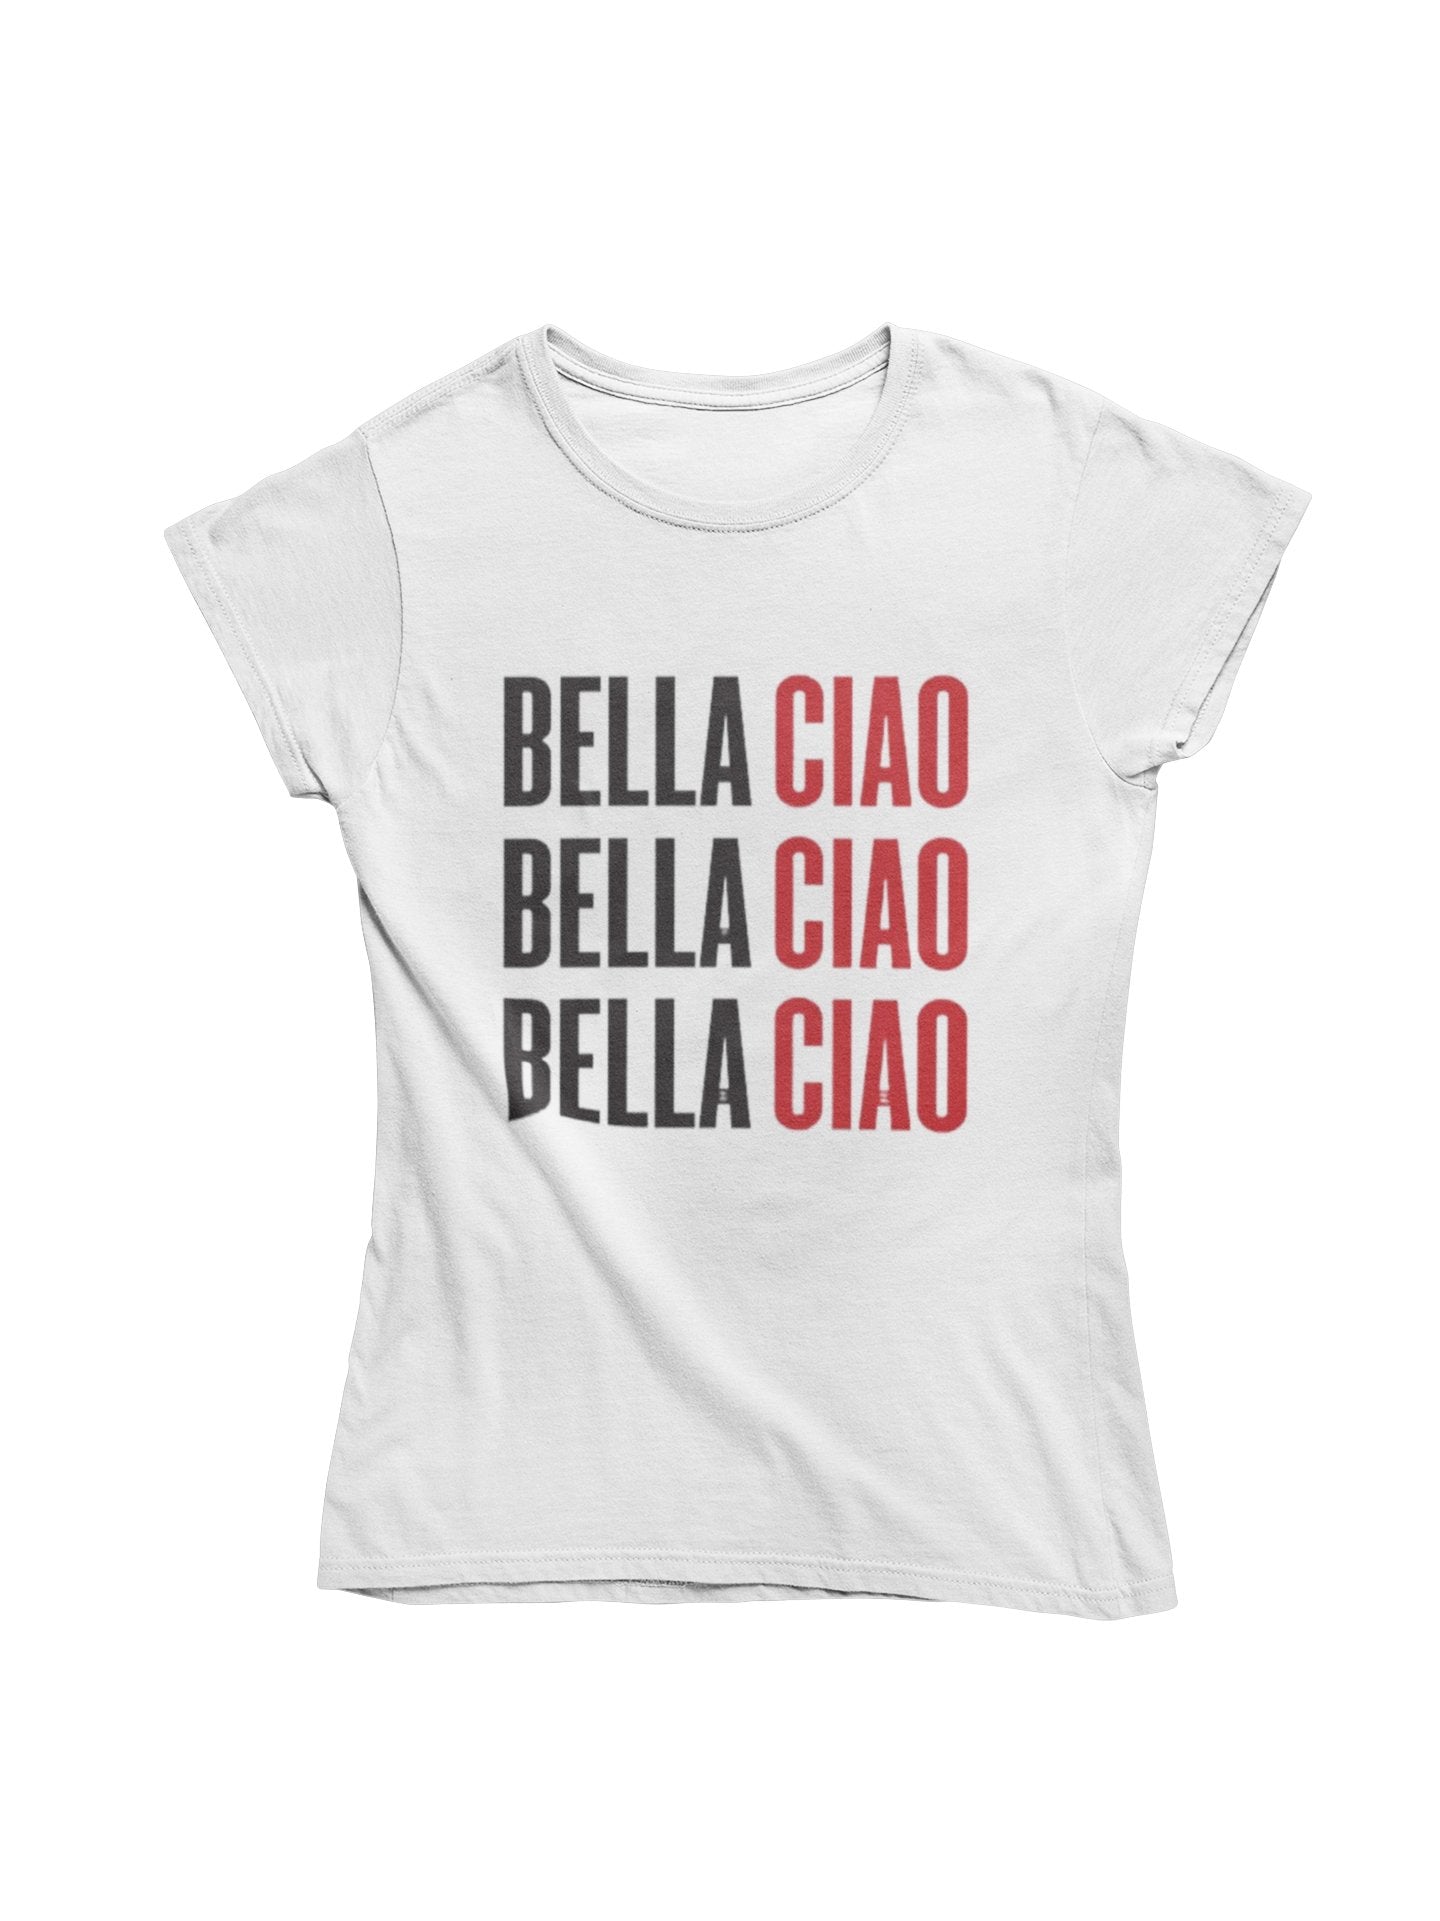 thelegalgang,Bella Ciao Money Heist T Shirt for Women,WOMEN.